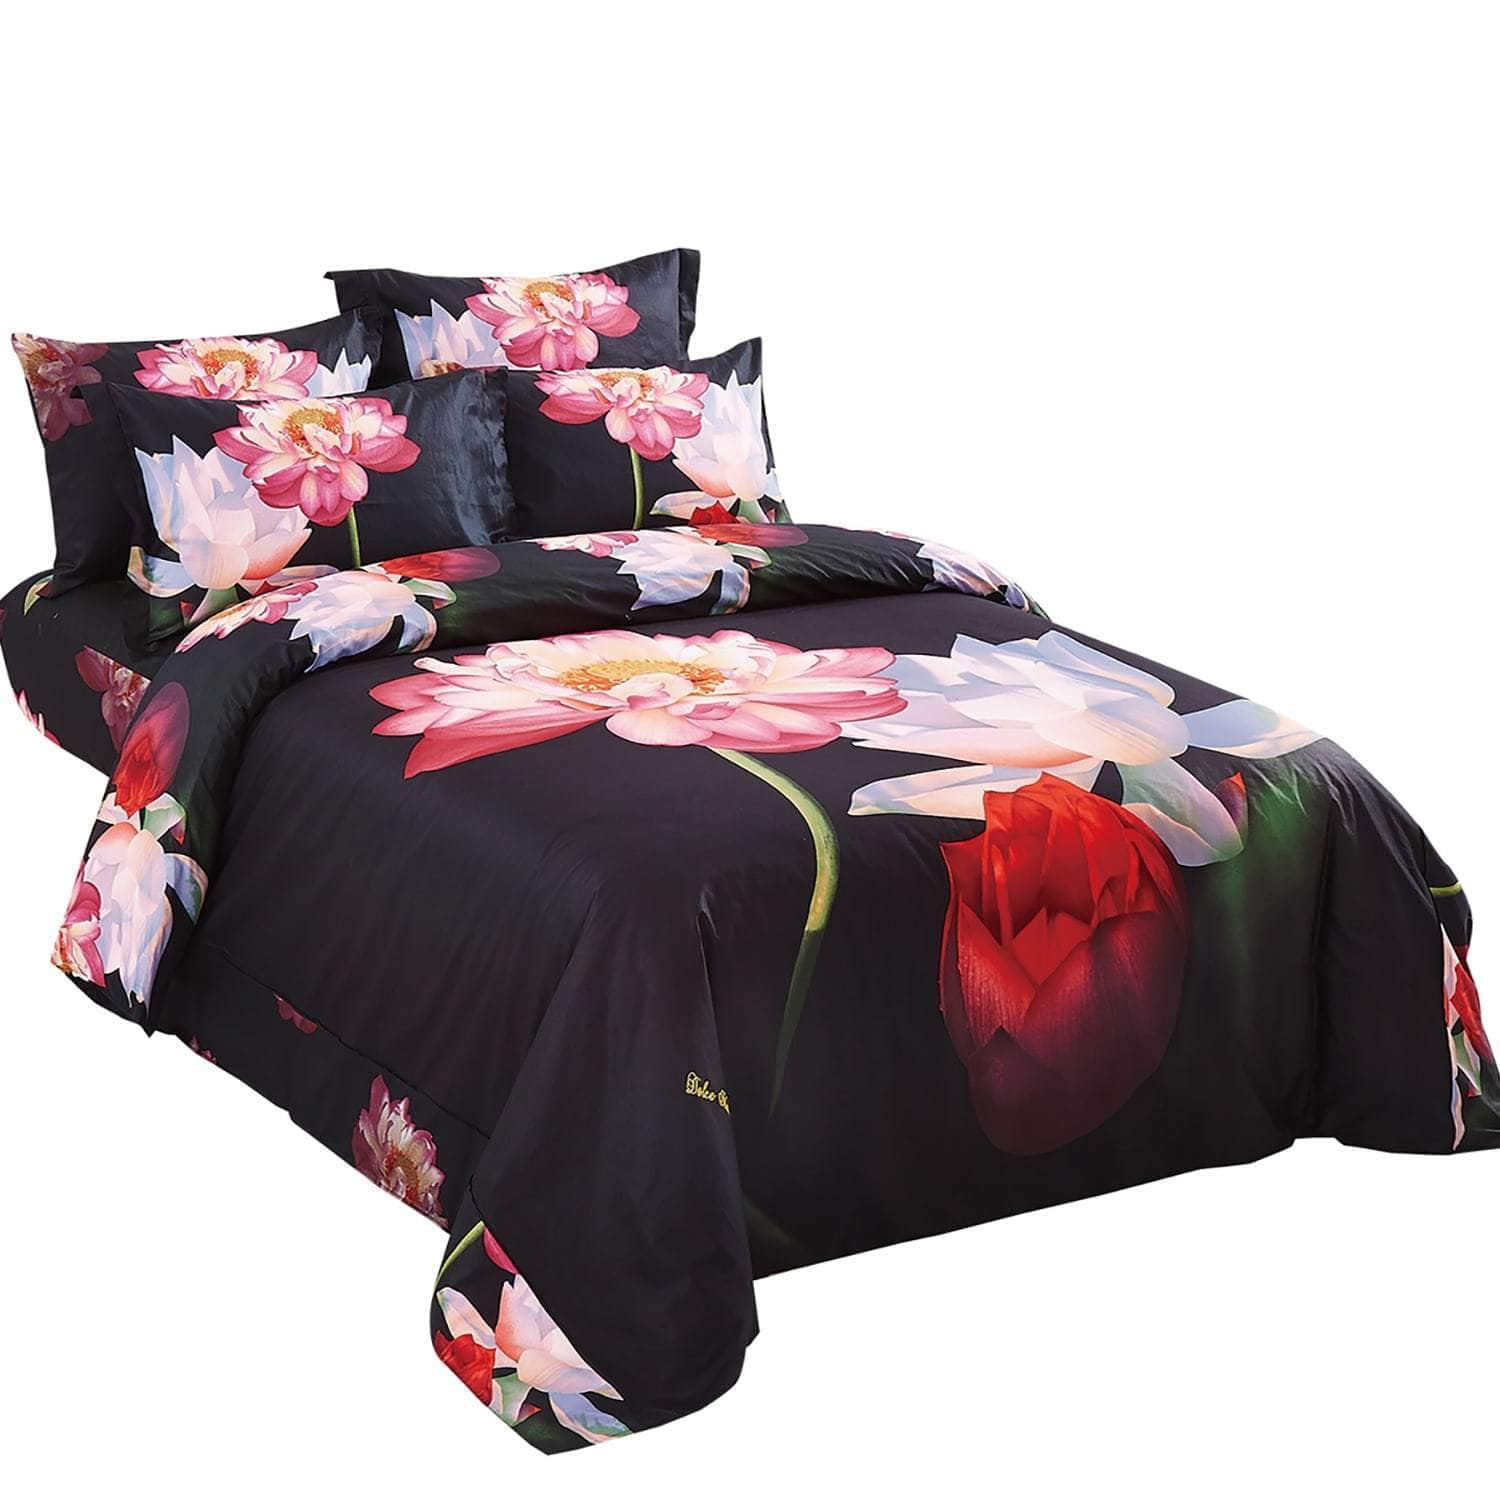 Dolce Mela DM509Q Duvet Cover Set Queen Size Floral Bedding 